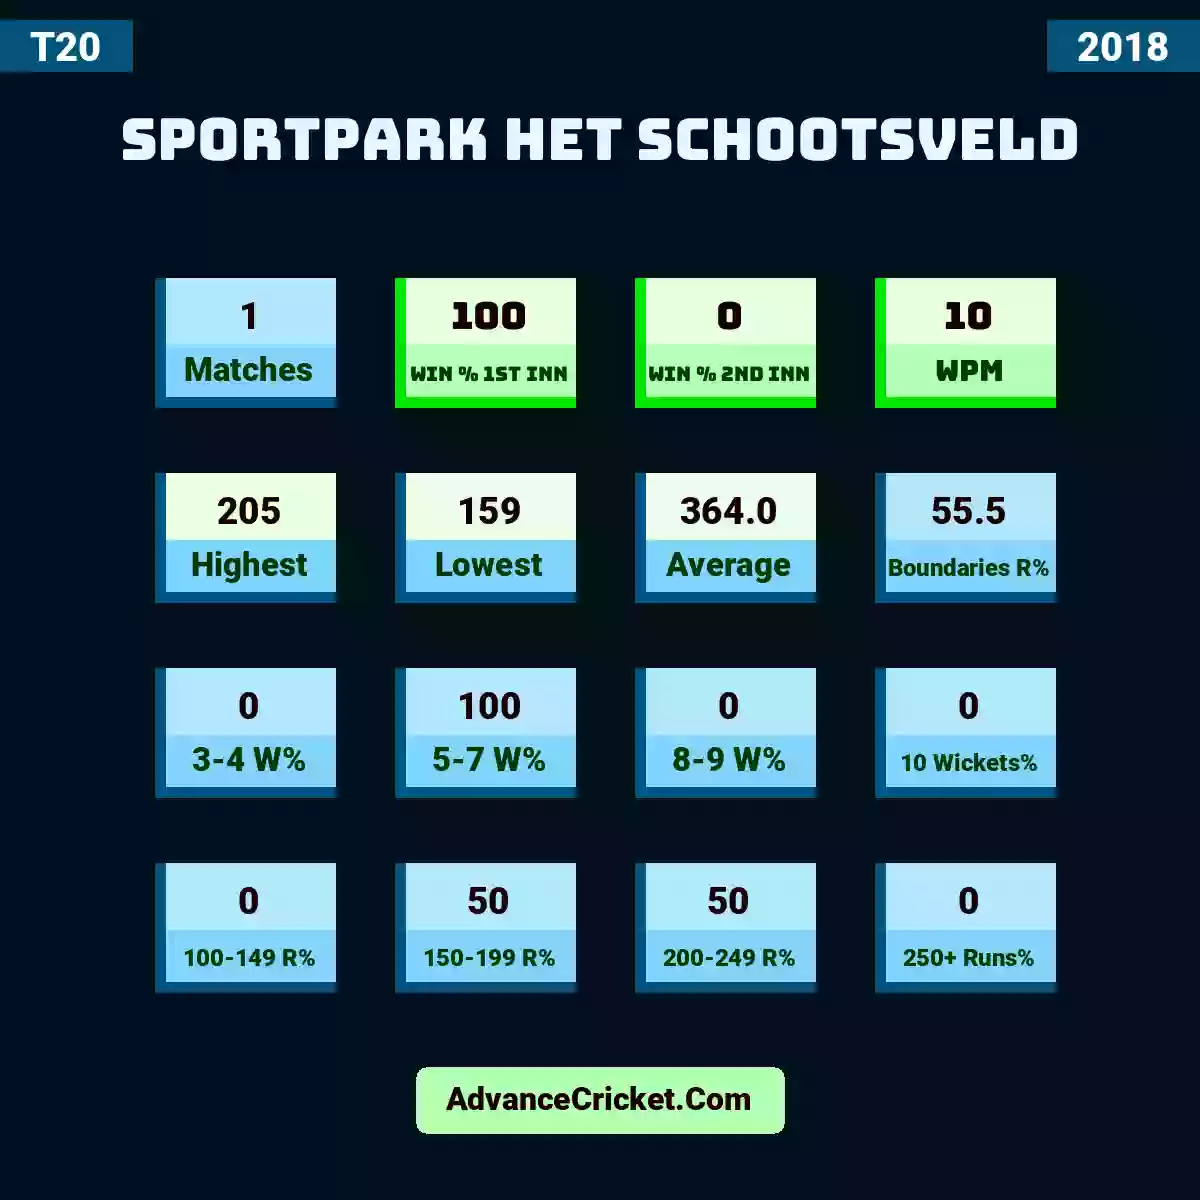 Image showing Sportpark Het Schootsveld with Matches: 1, Win % 1st Inn: 100, Win % 2nd Inn: 0, WPM: 10, Highest: 205, Lowest: 159, Average: 364.0, Boundaries R%: 55.5, 3-4 W%: 0, 5-7 W%: 100, 8-9 W%: 0, 10 Wickets%: 0, 100-149 R%: 0, 150-199 R%: 50, 200-249 R%: 50, 250+ Runs%: 0.